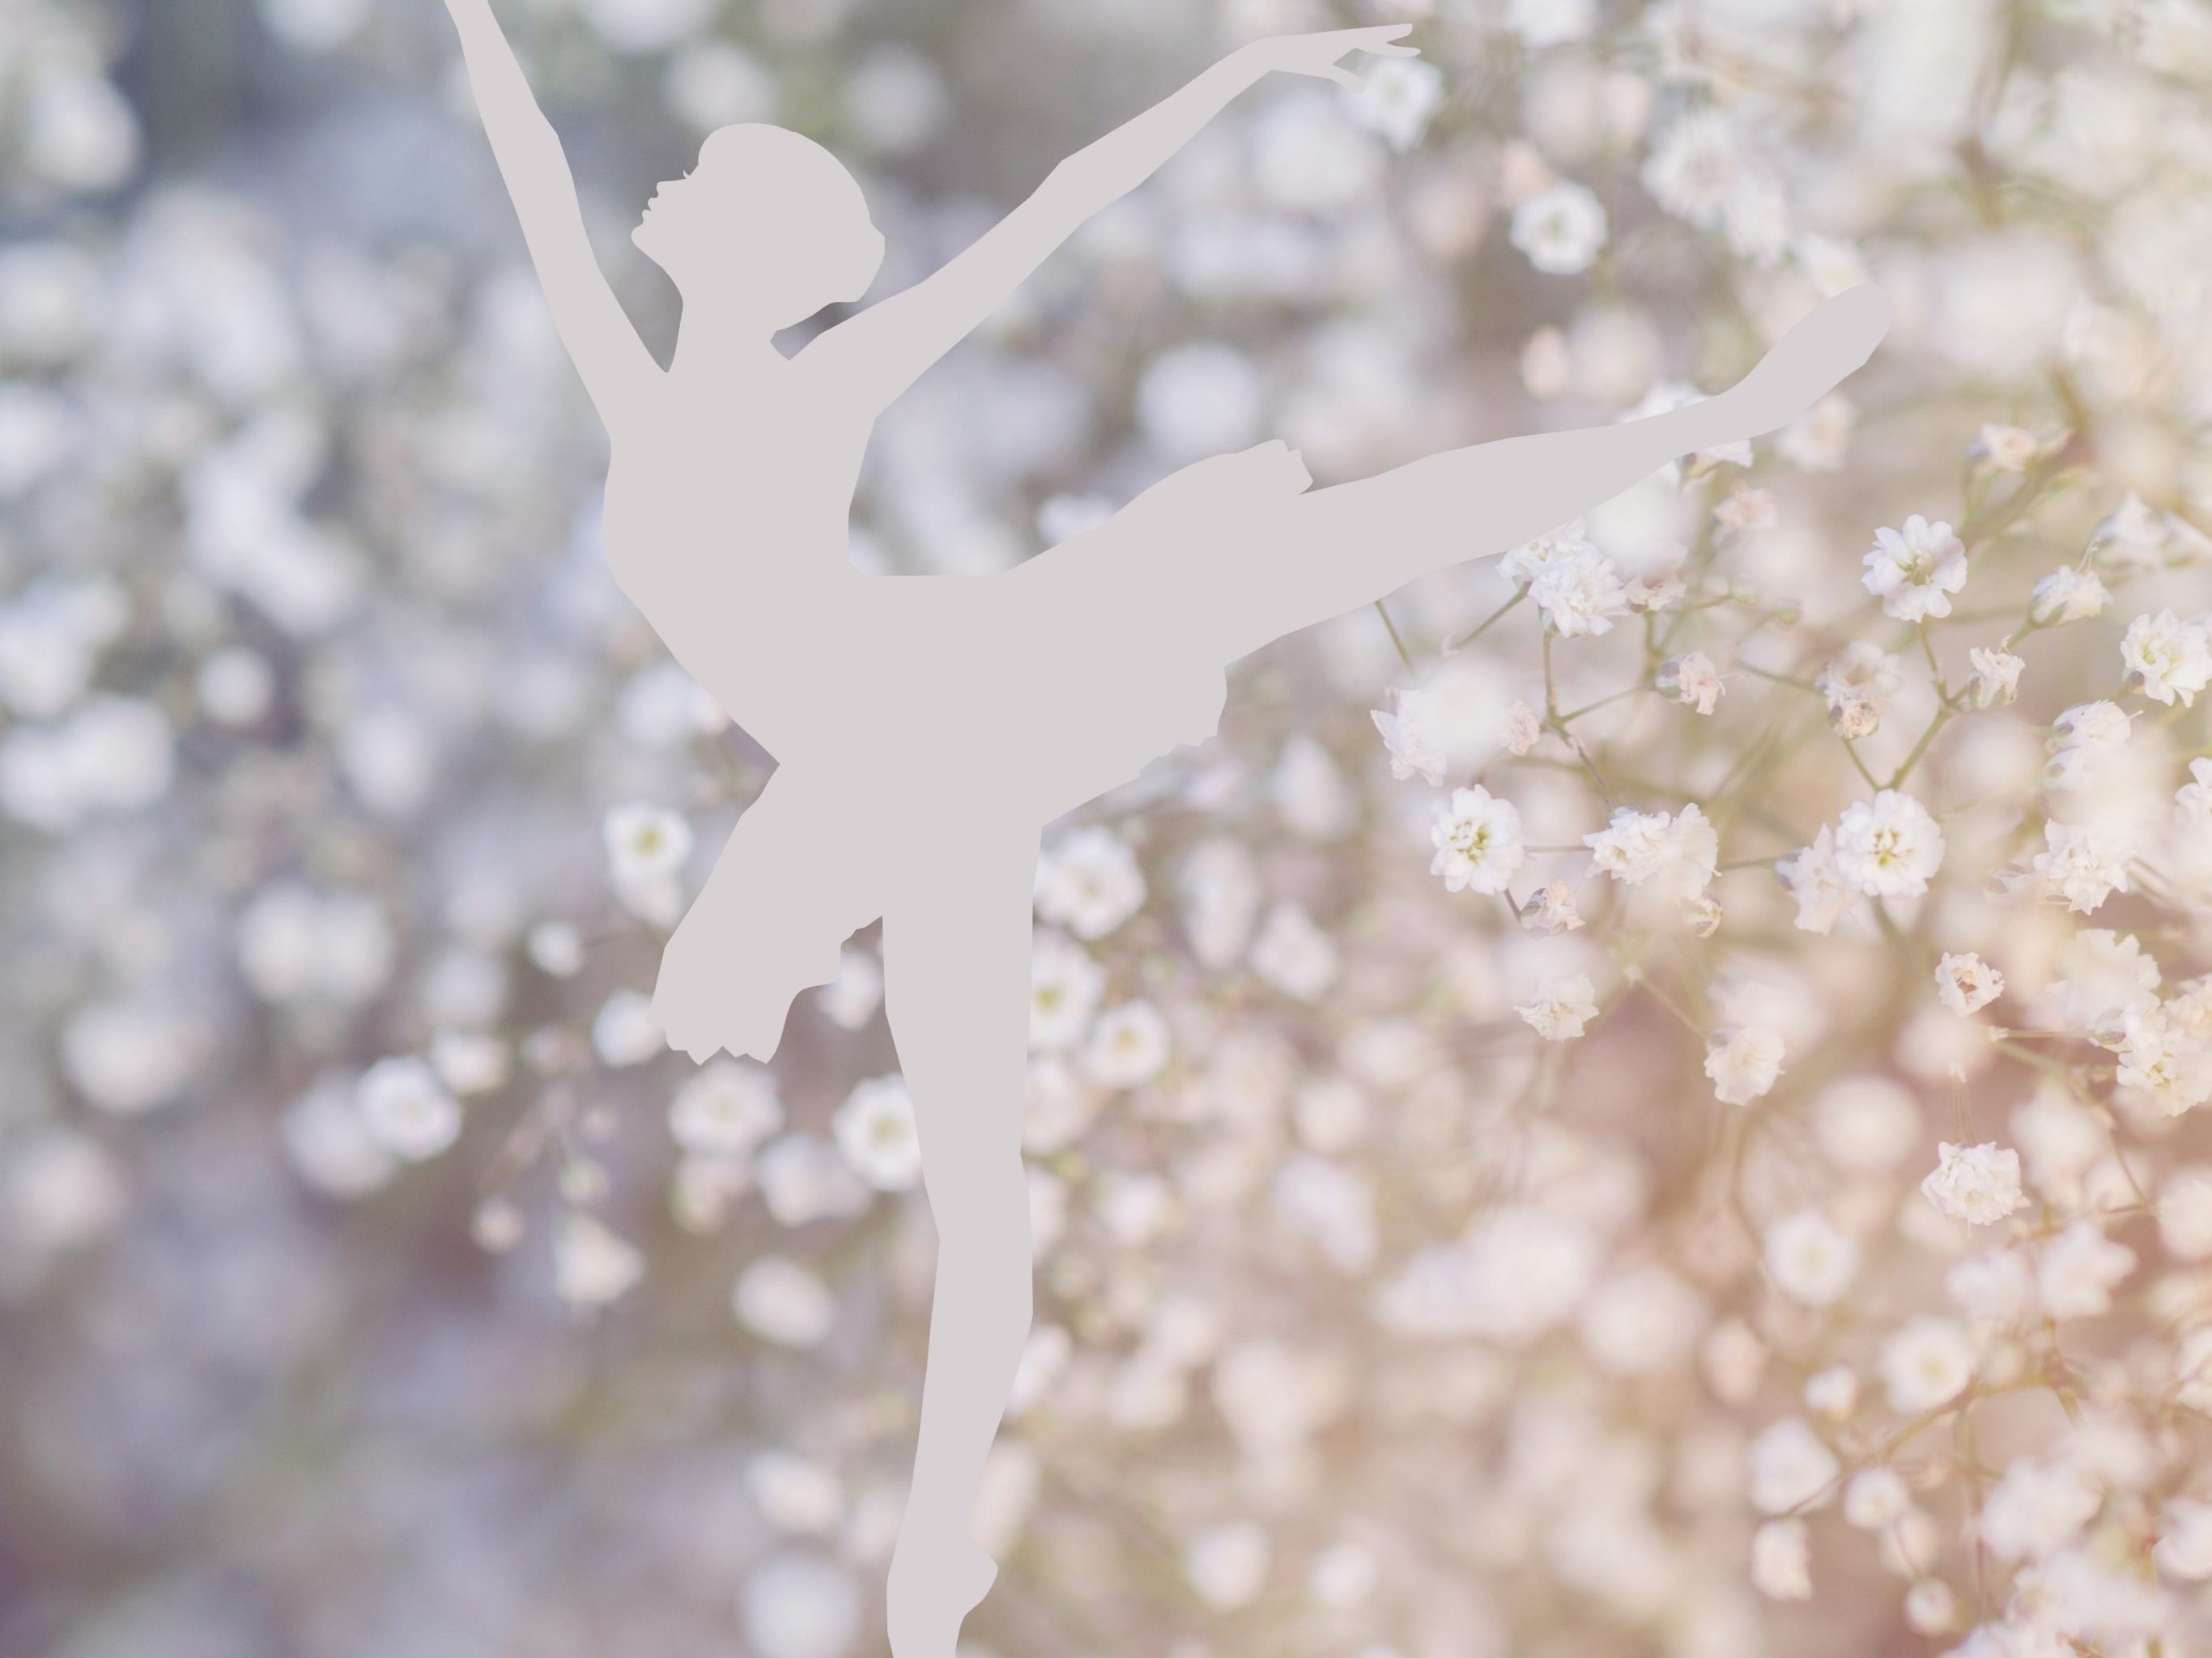 2732x2048 iPad air iPad Pro wallpapers Ballerina Girl Dance White Dandelion Flowers iPad Wallpaper 2732x2048 pixels resolution